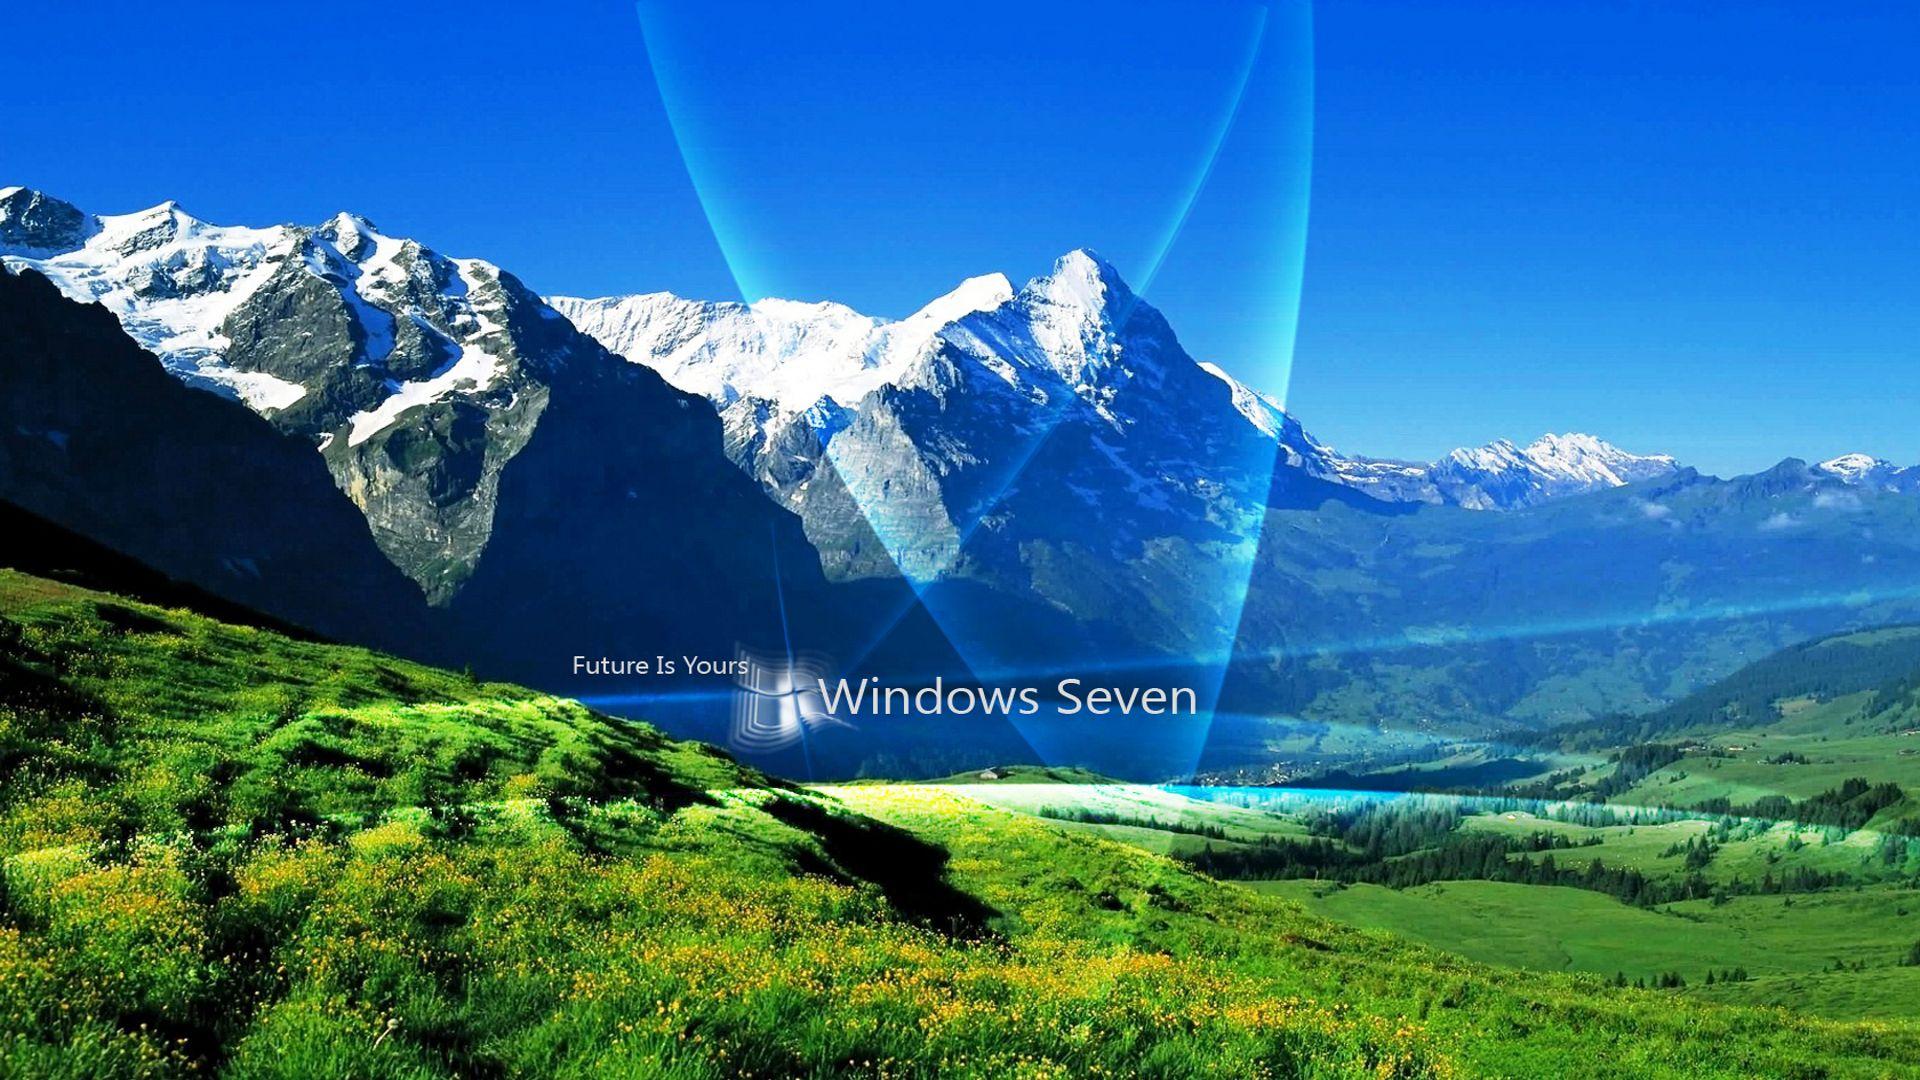 Cool Animated Windows 7 Background